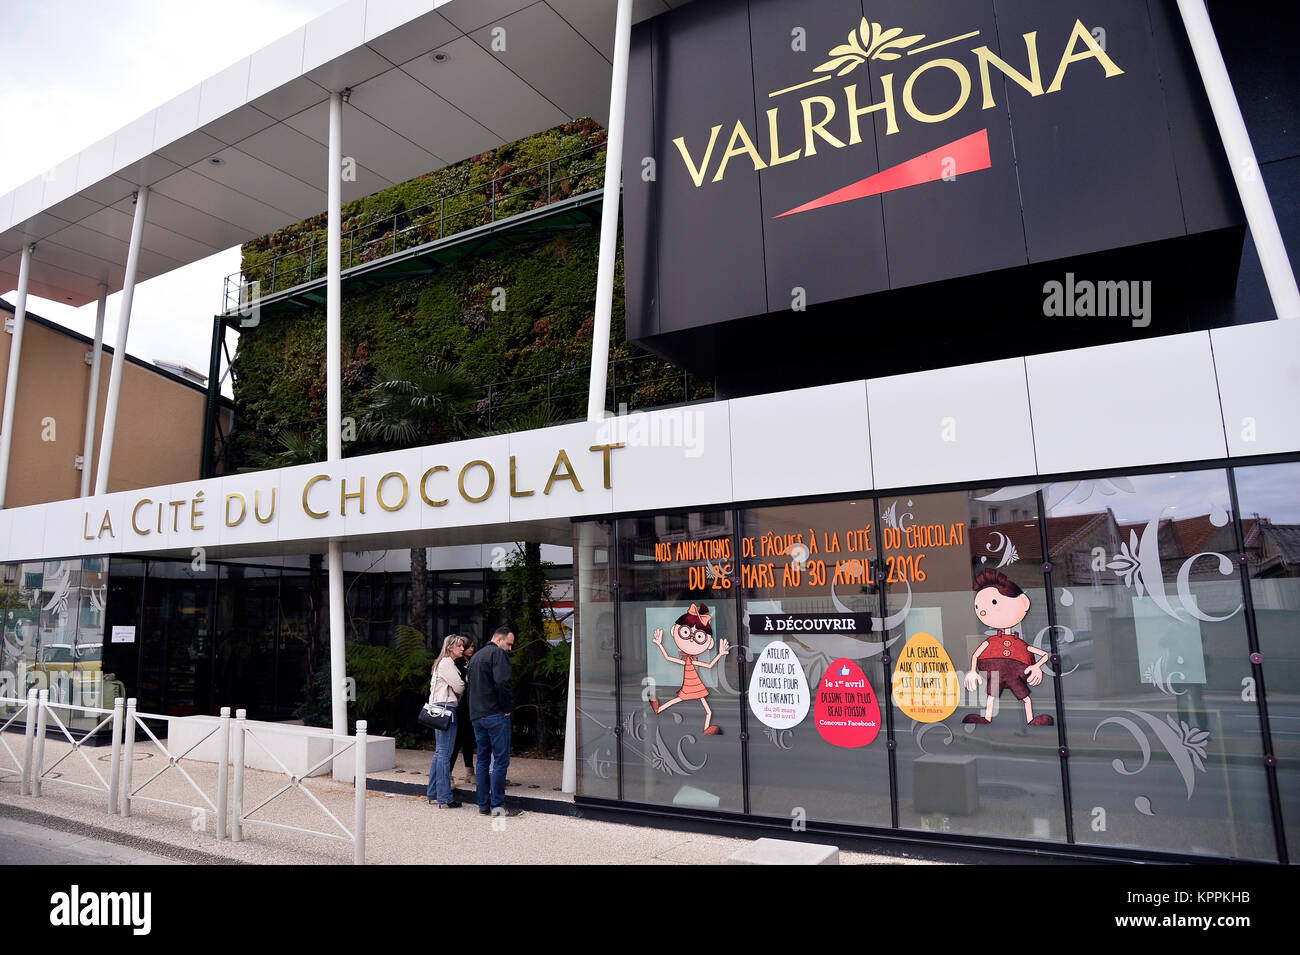 La Cité du Chocolat Valrhona - Tain l'Hermitage - Drôme - France Photo  Stock - Alamy